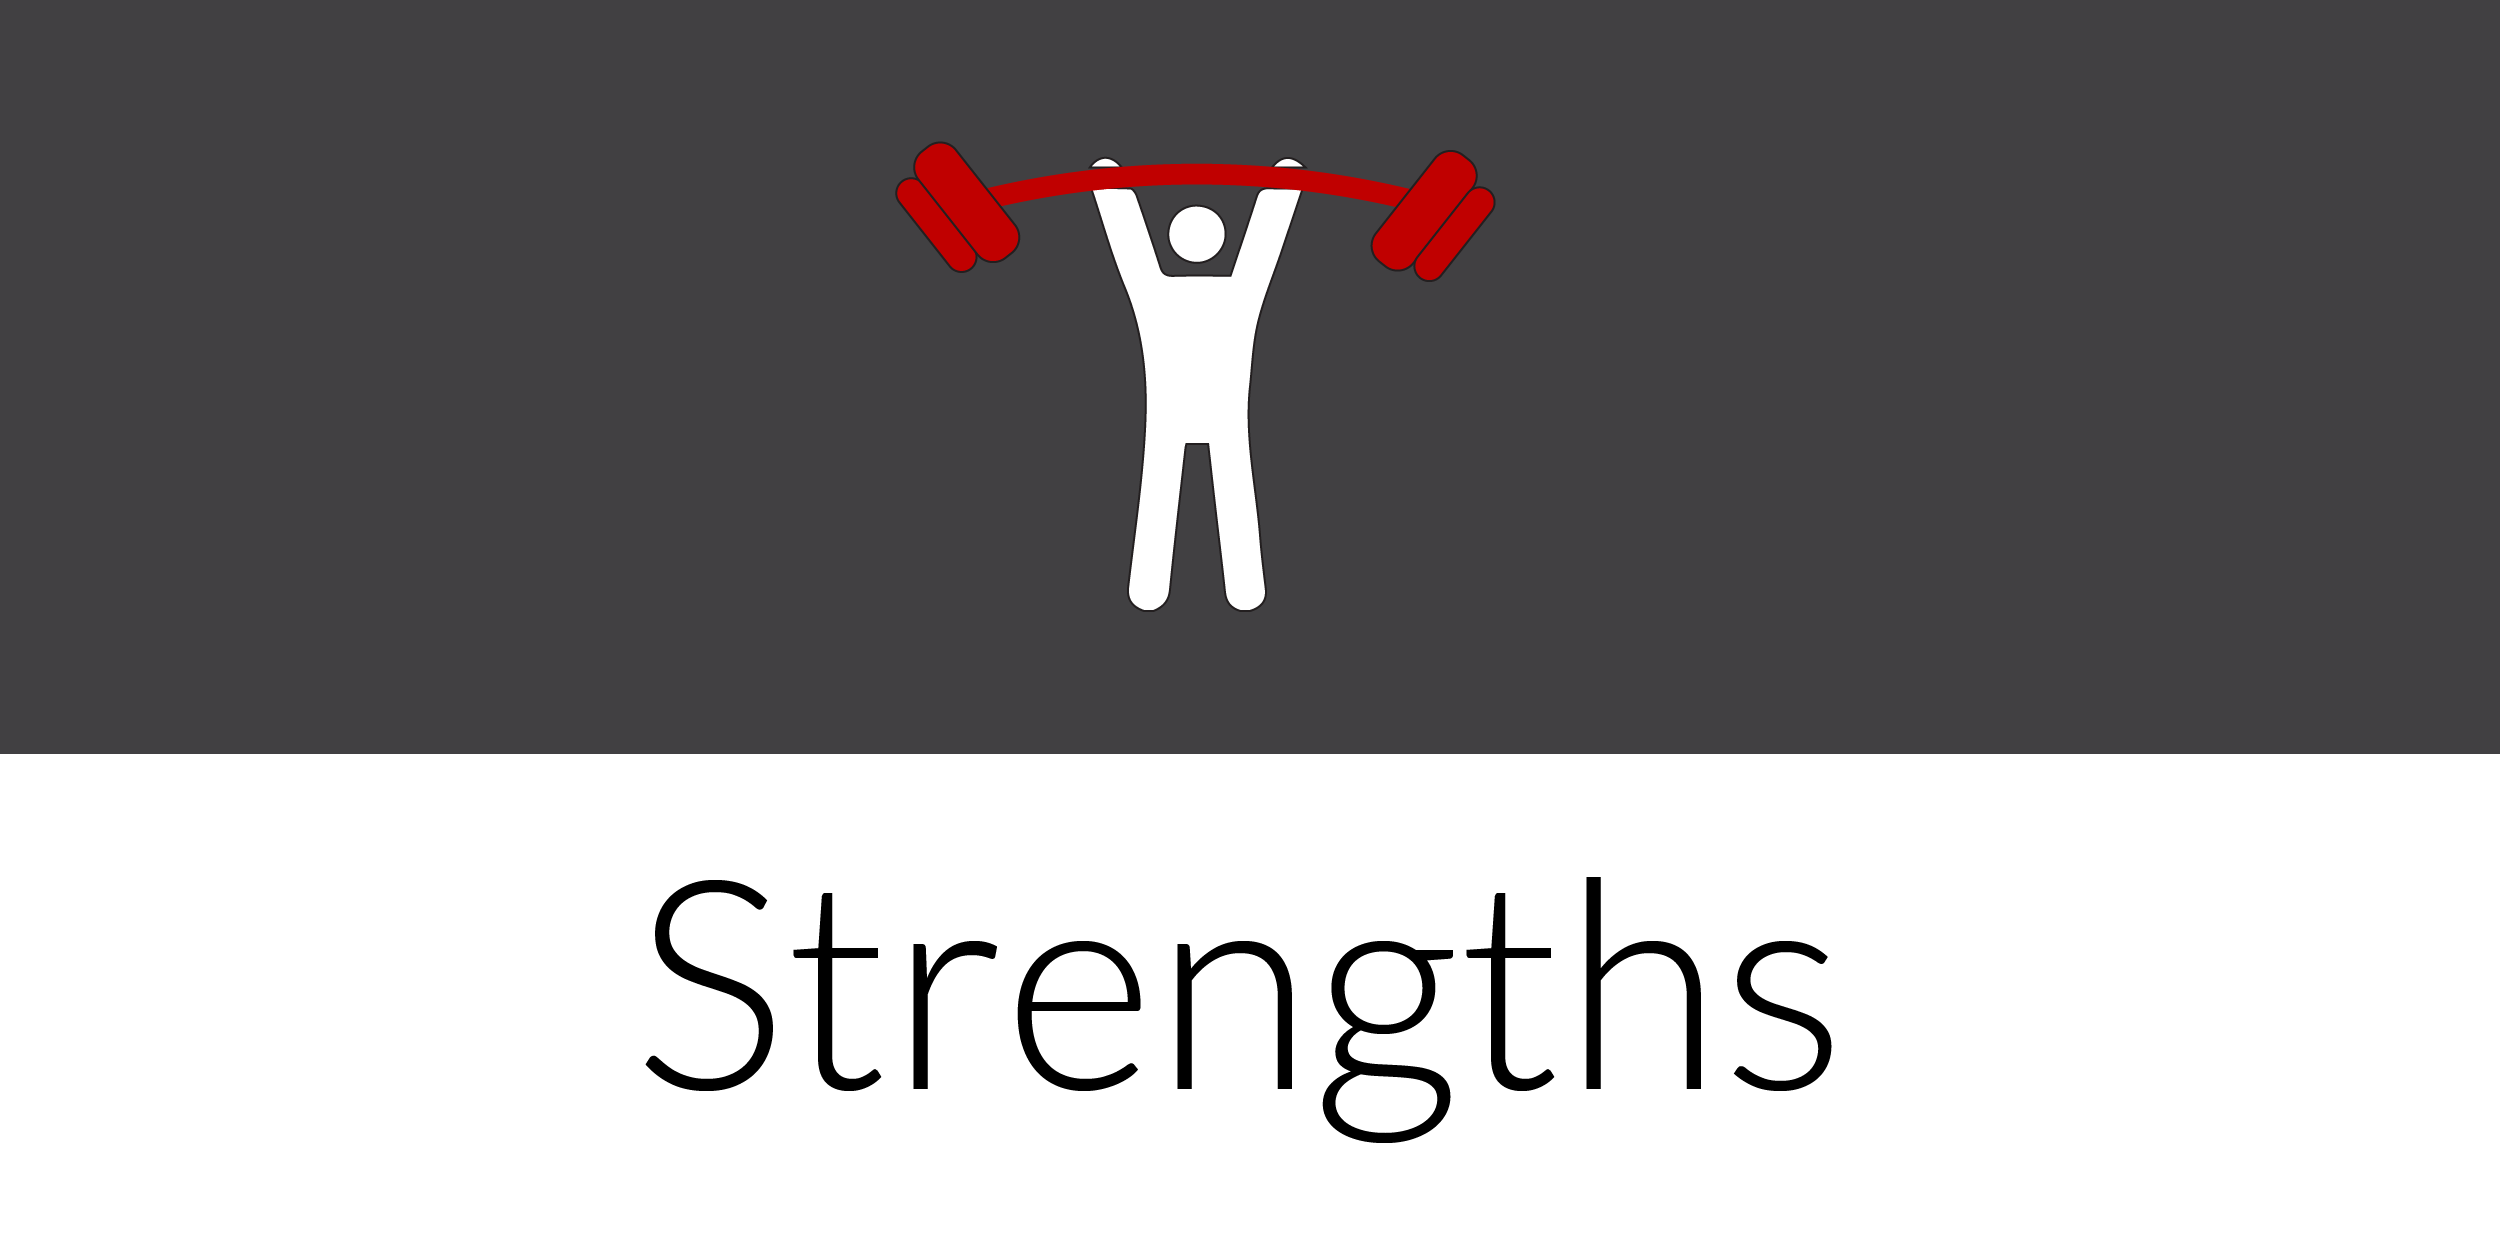 SWOT Analysis - Strengths